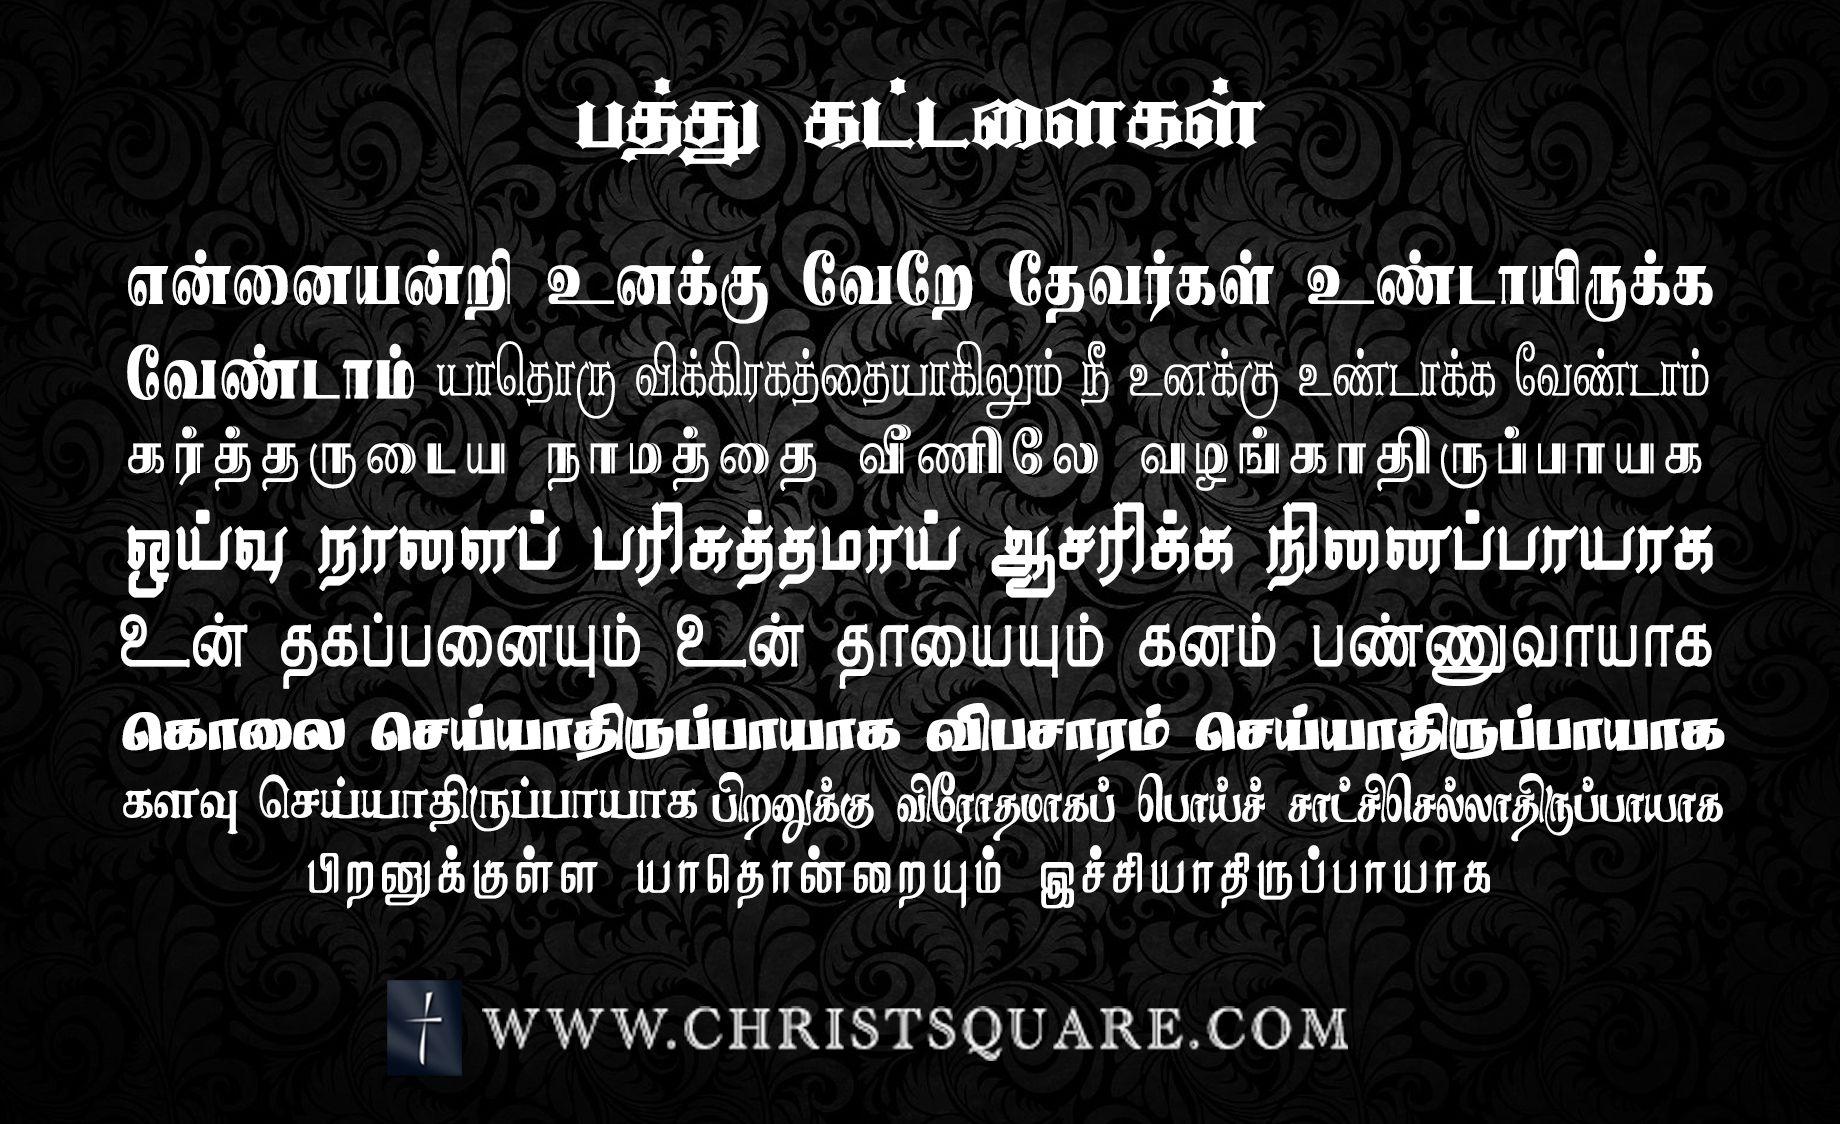 tamil ten commandments, tamil christian wallpaper. Tamil